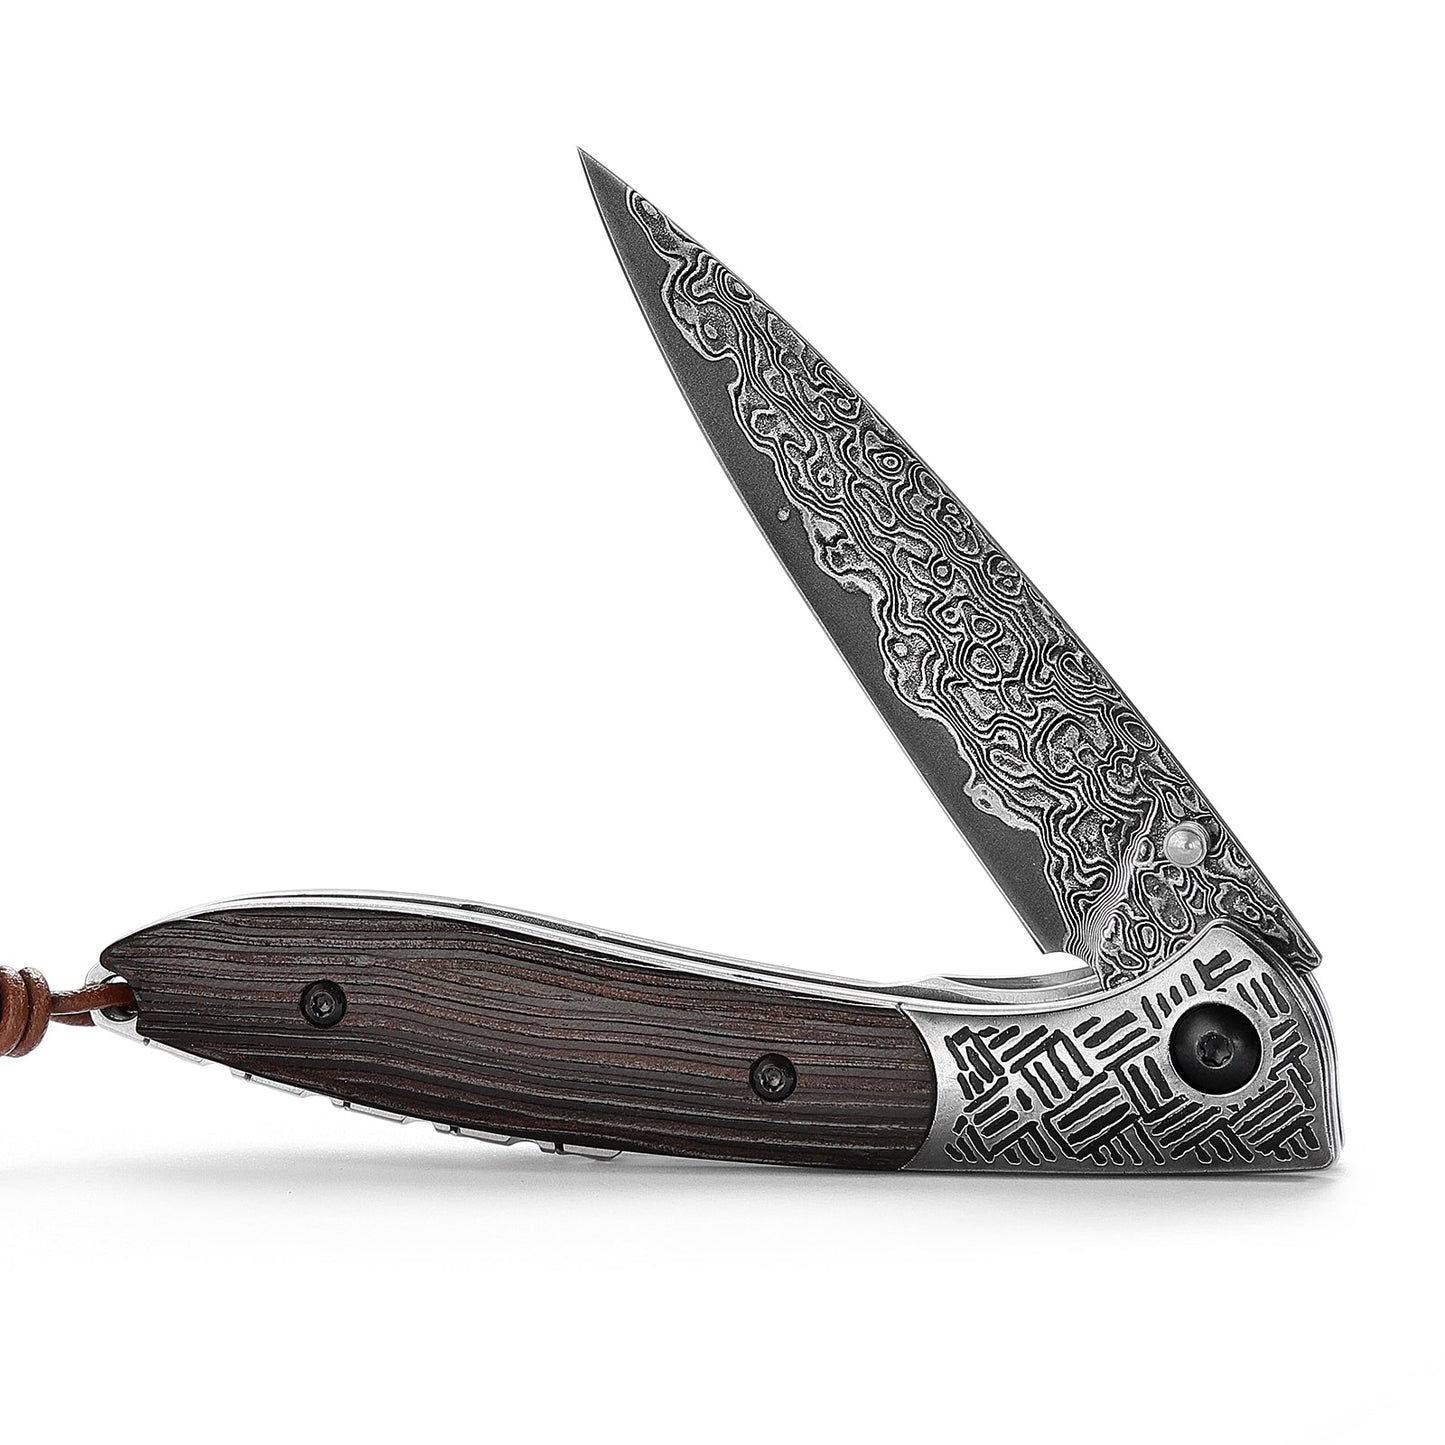 Piscis Austrinus-01E Handmade Pocket Knife with Leather Sheath,3.15in 67 Layers Damascus Steel Blade,Ebony Handle